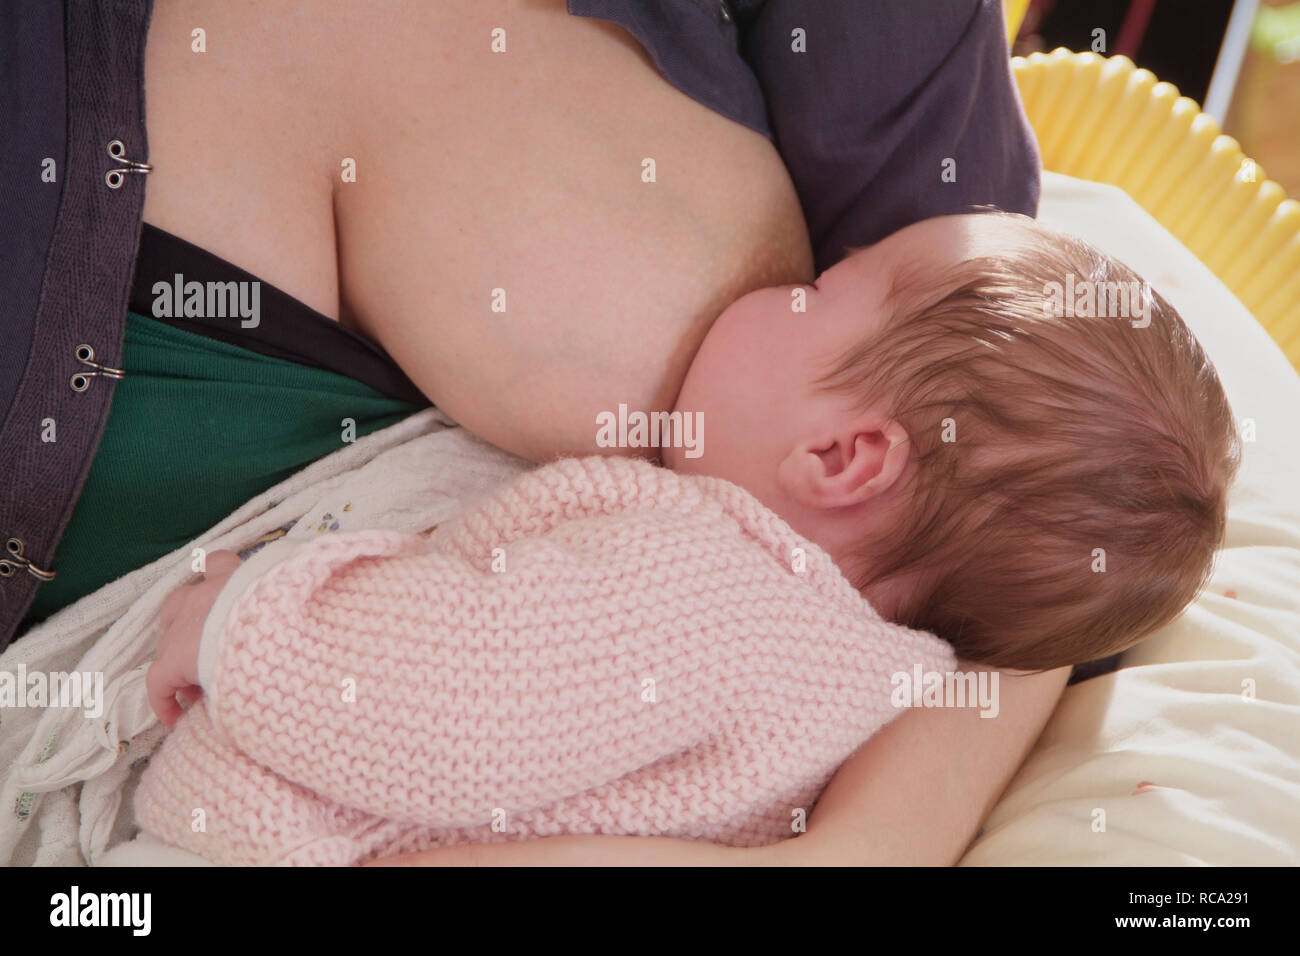 Junge Mutter stillt ihre Tochter neugeborene, tipo das ist 12 Tage alt | giovane madre allattava il neonato - baby ist 12 giorni. Bambino, chi Foto Stock